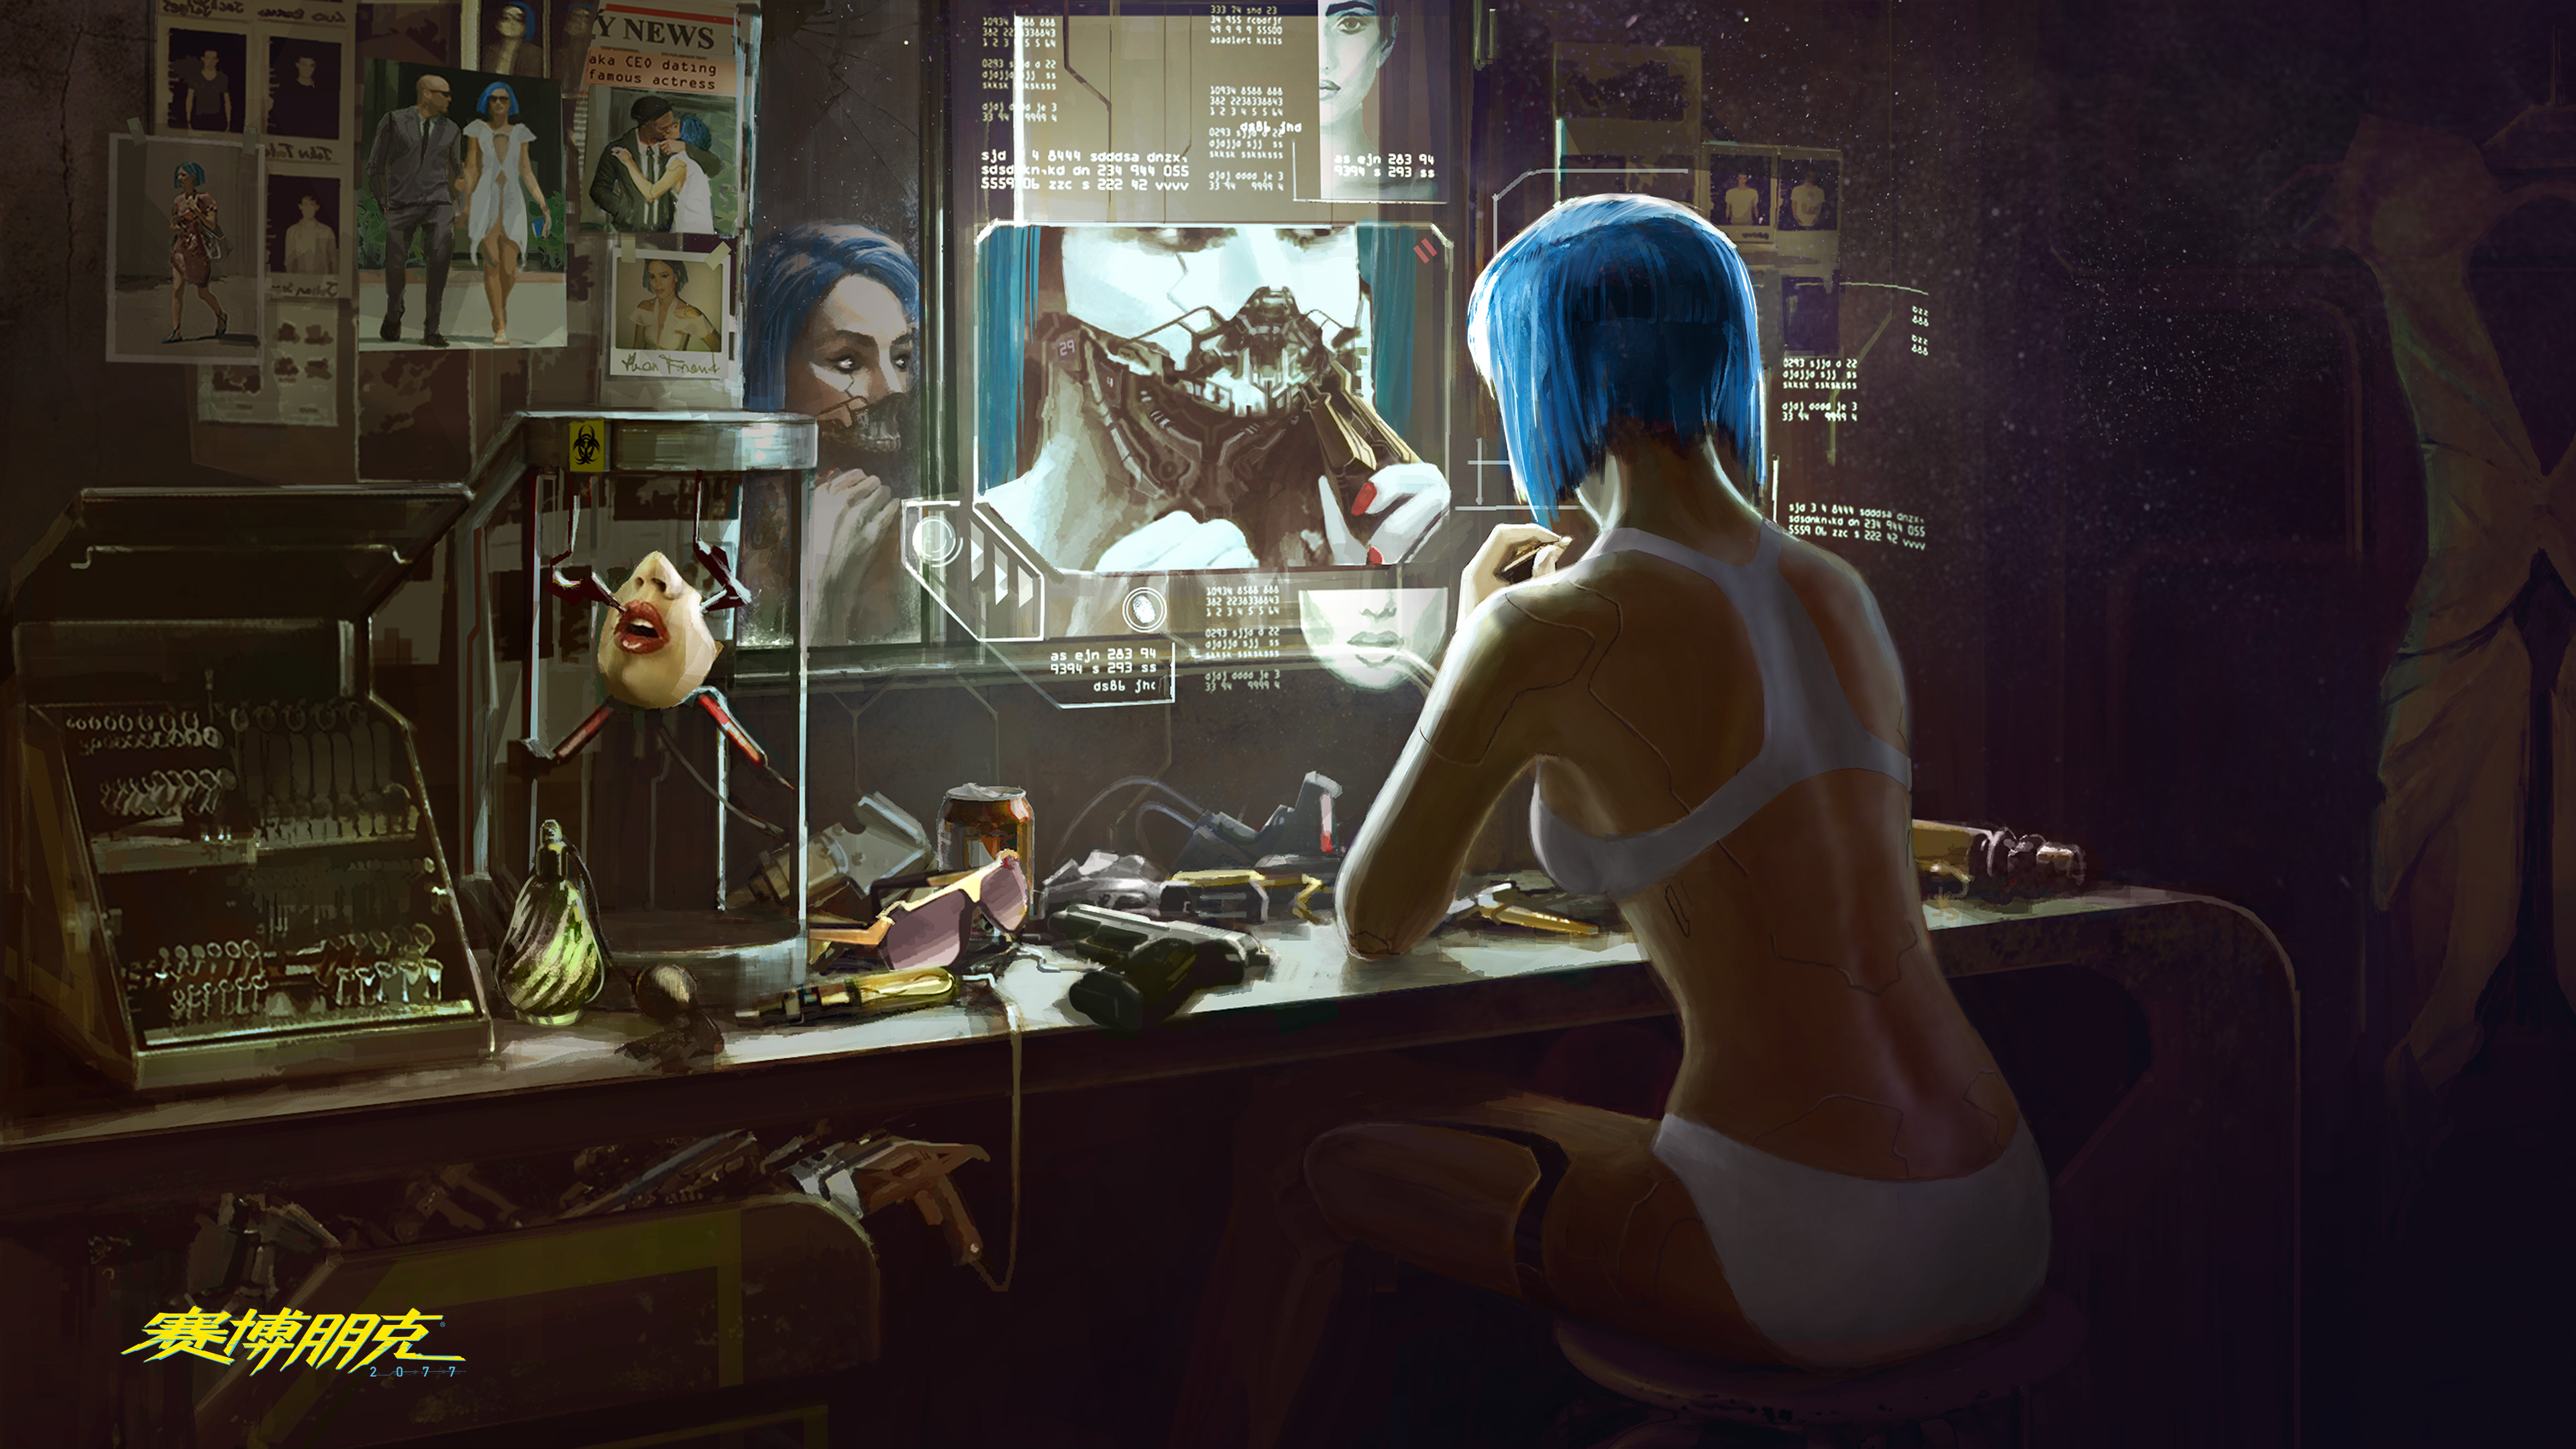 General 3840x2160 cyberpunk Cyberpunk 2077 cyborg video games science fiction women women science fiction video game art PC gaming bra panties sitting mirror monitor blue hair